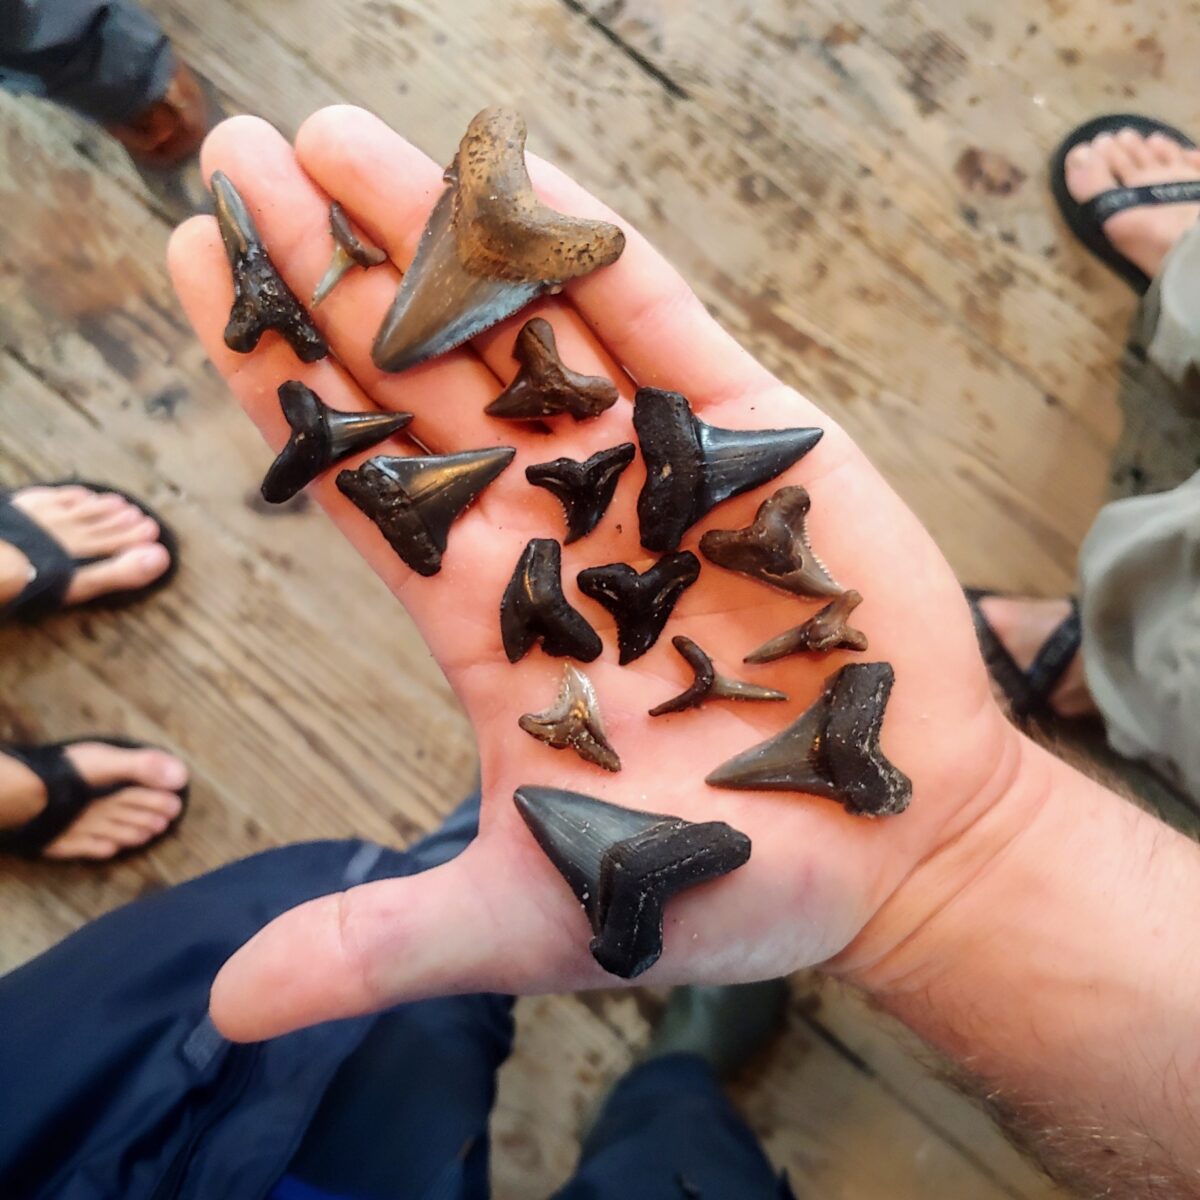 Shark teeth found in waters around Charleston, SC.